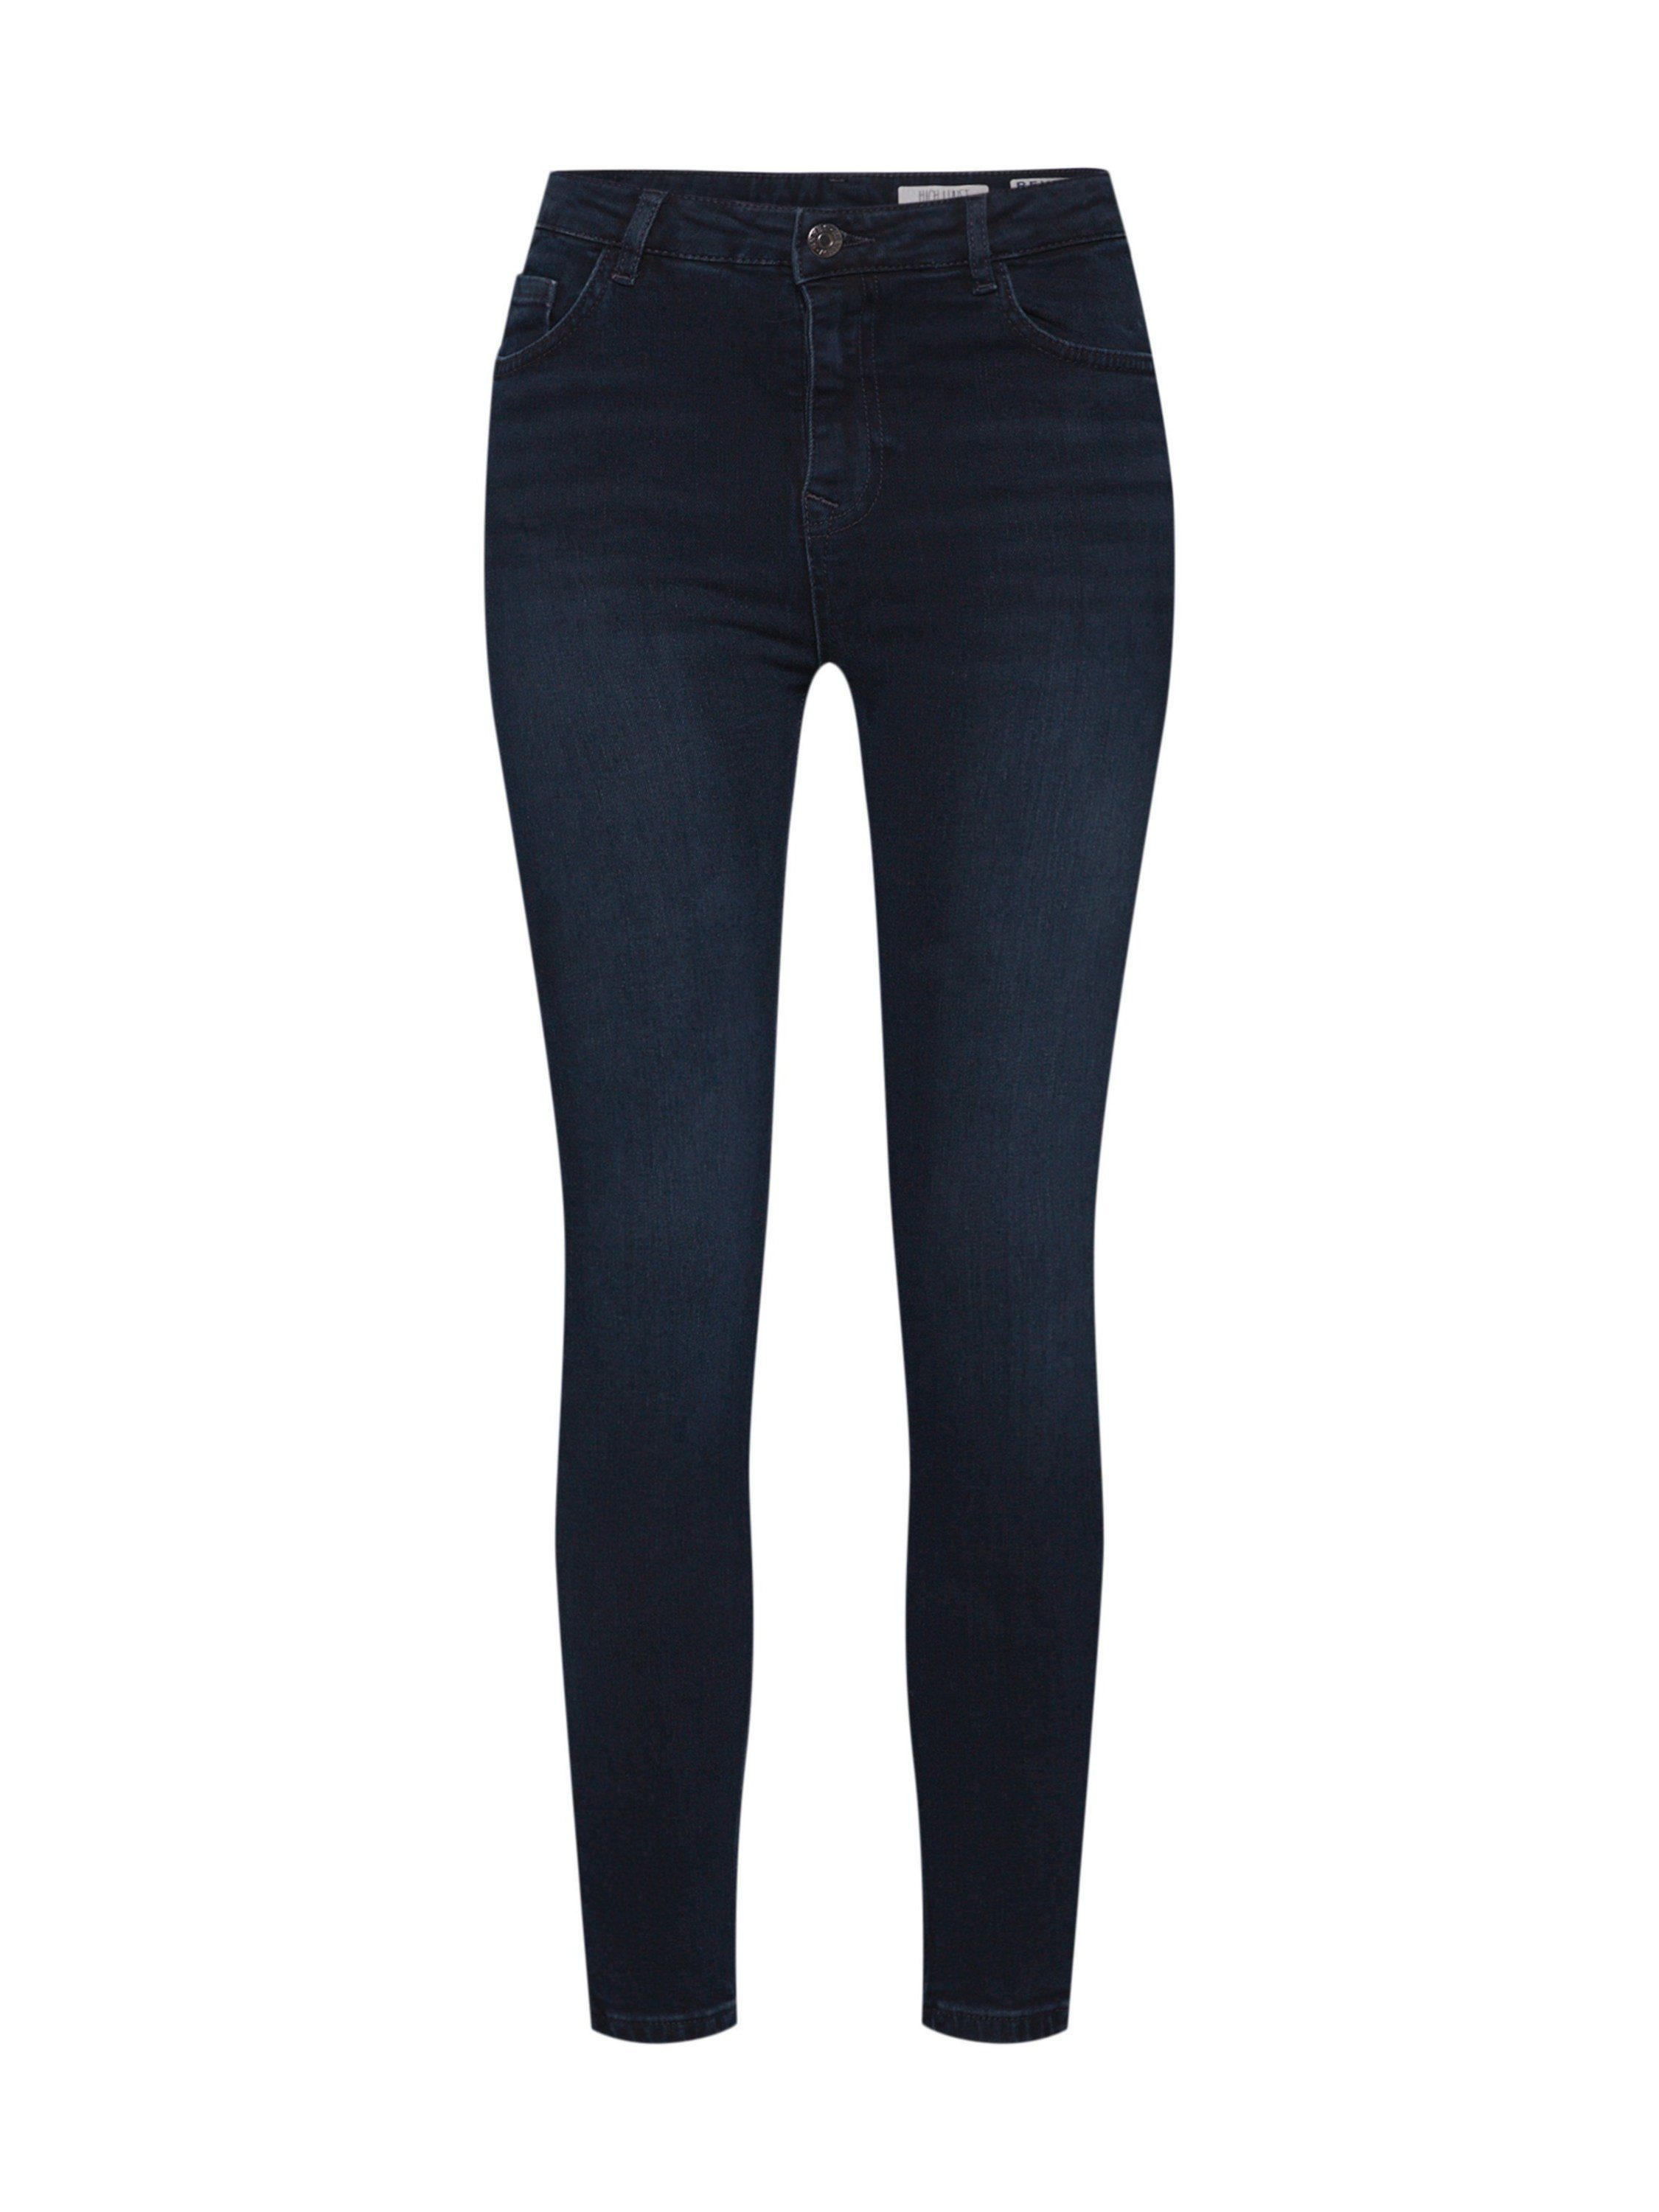 EE/_ LC/_ Dual D Ring Color Block Stripe Jeans Belt Canvas Strap Lady Decor Waistb